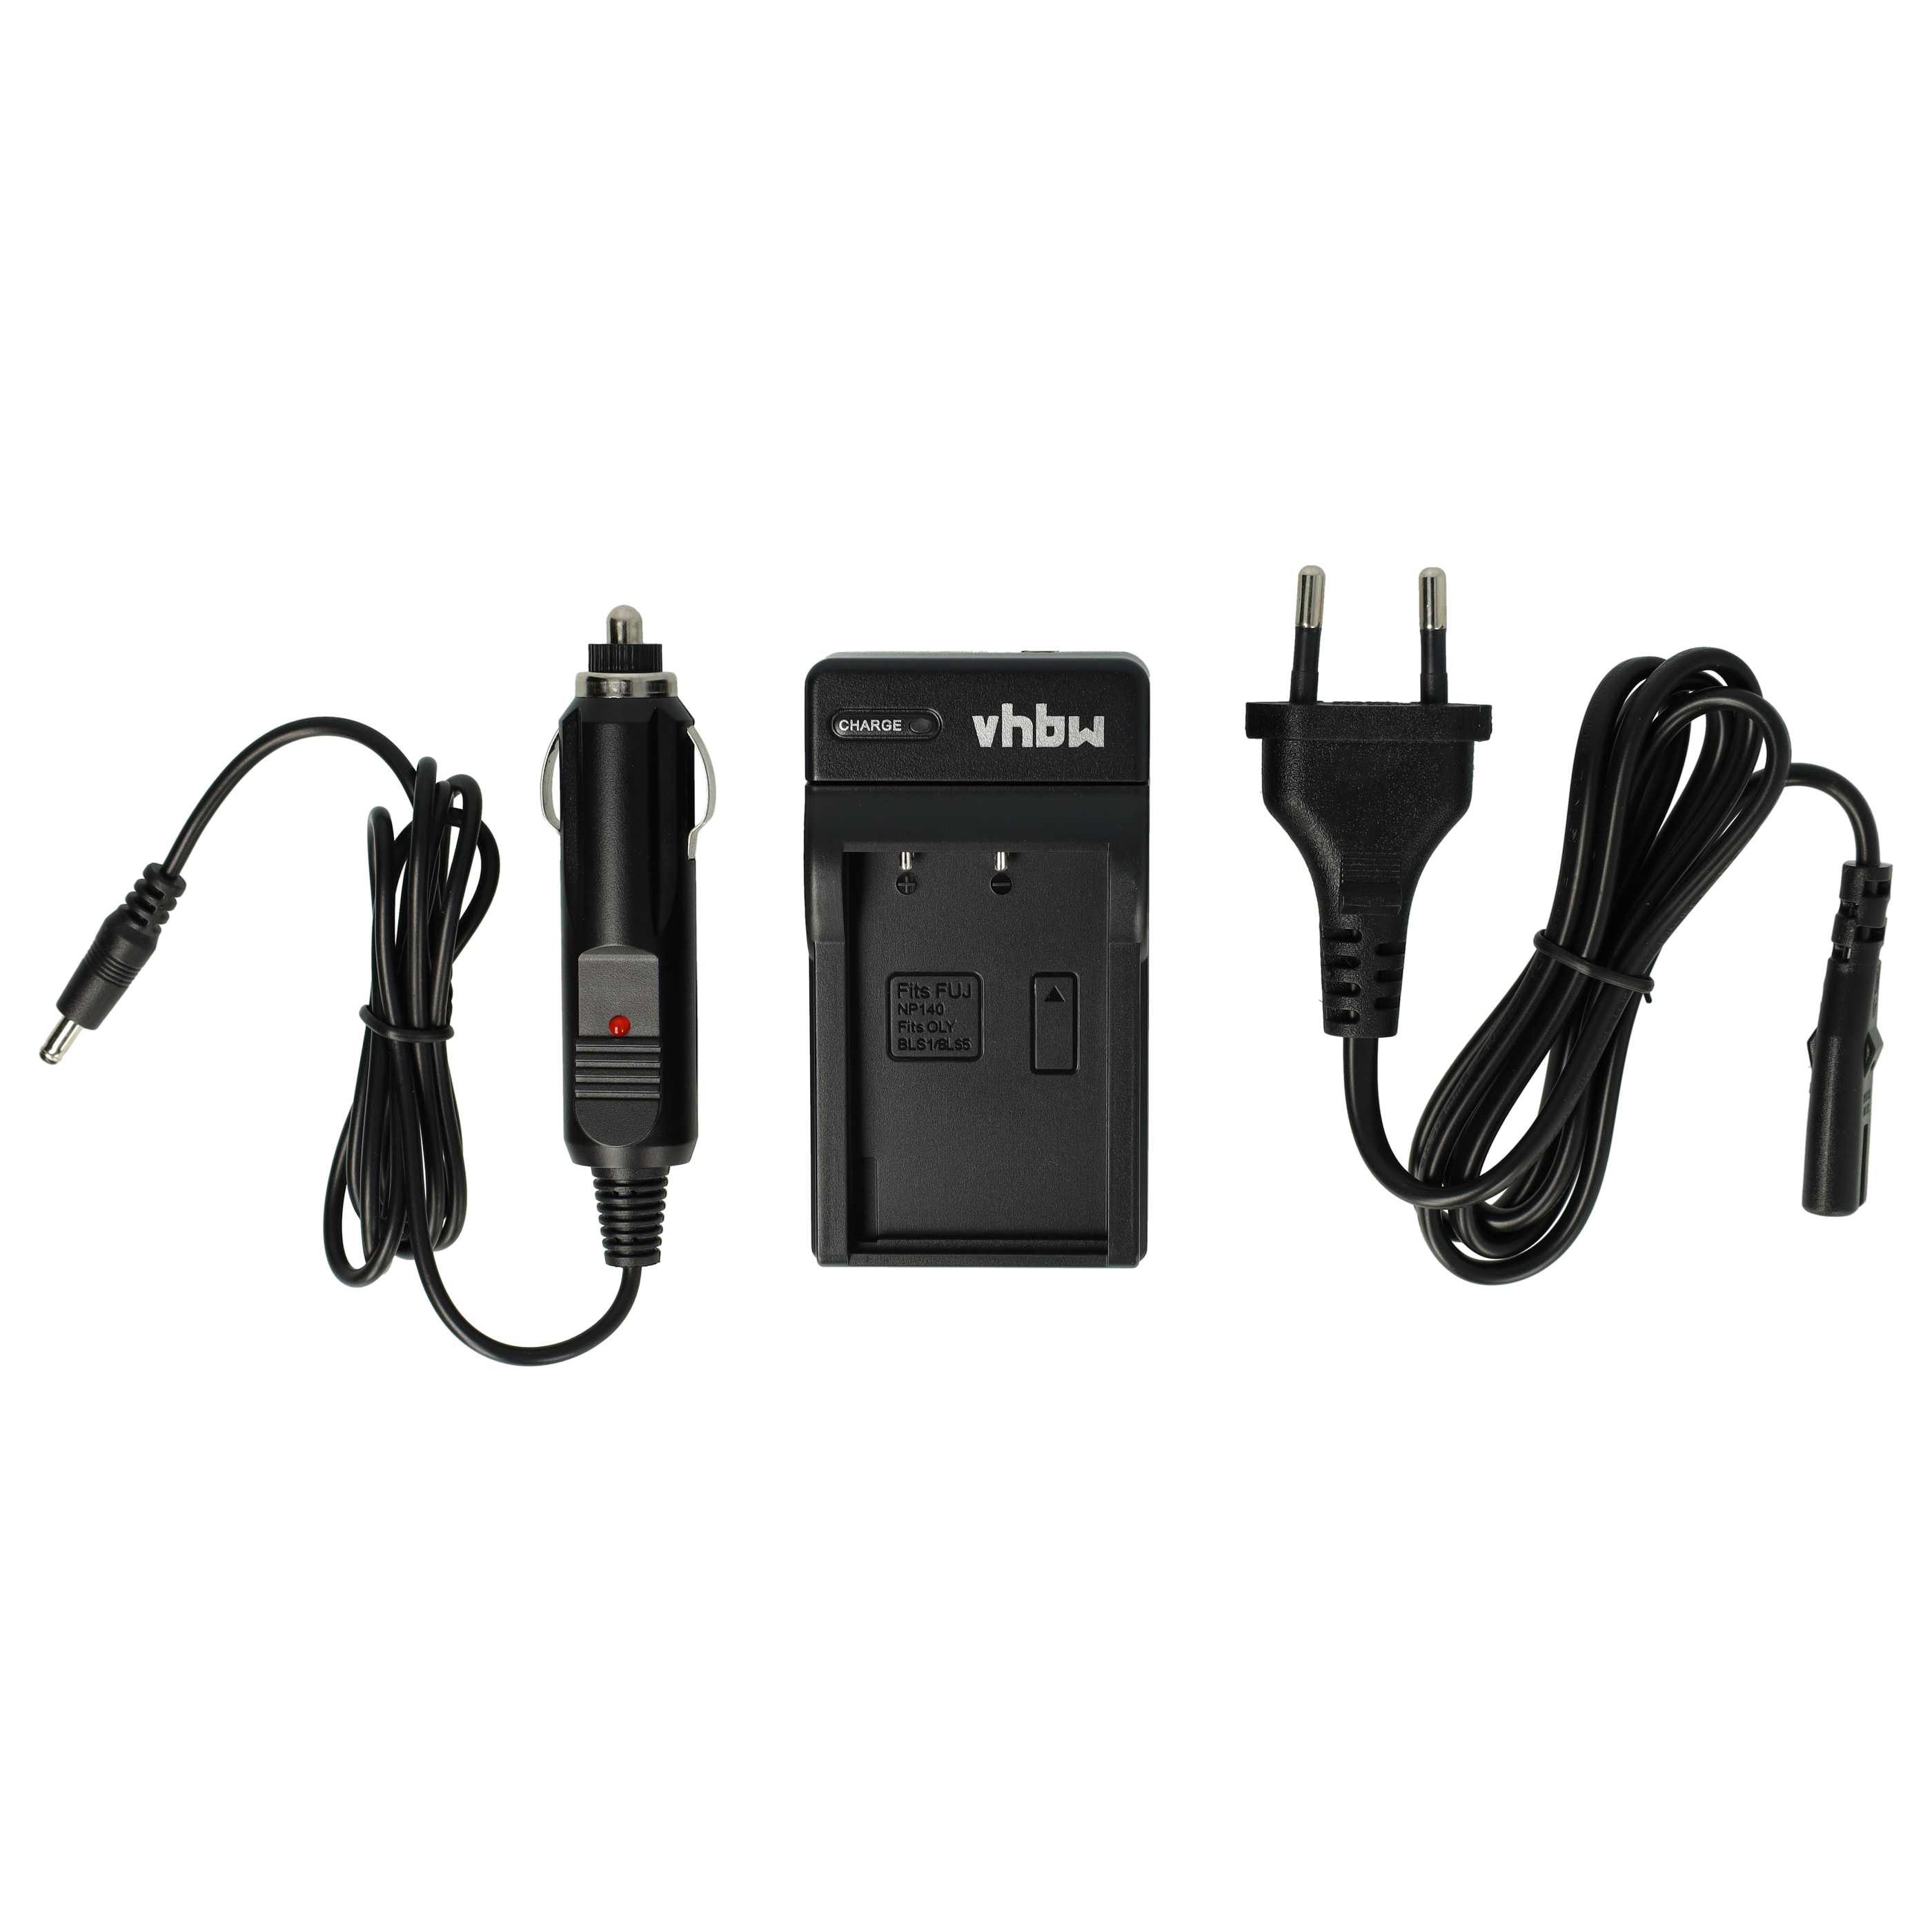 vhbw passend für Fuji FinePix S200EXR, S100fs, S200, S100 Camcorder Digital Kamera-Ladegerät